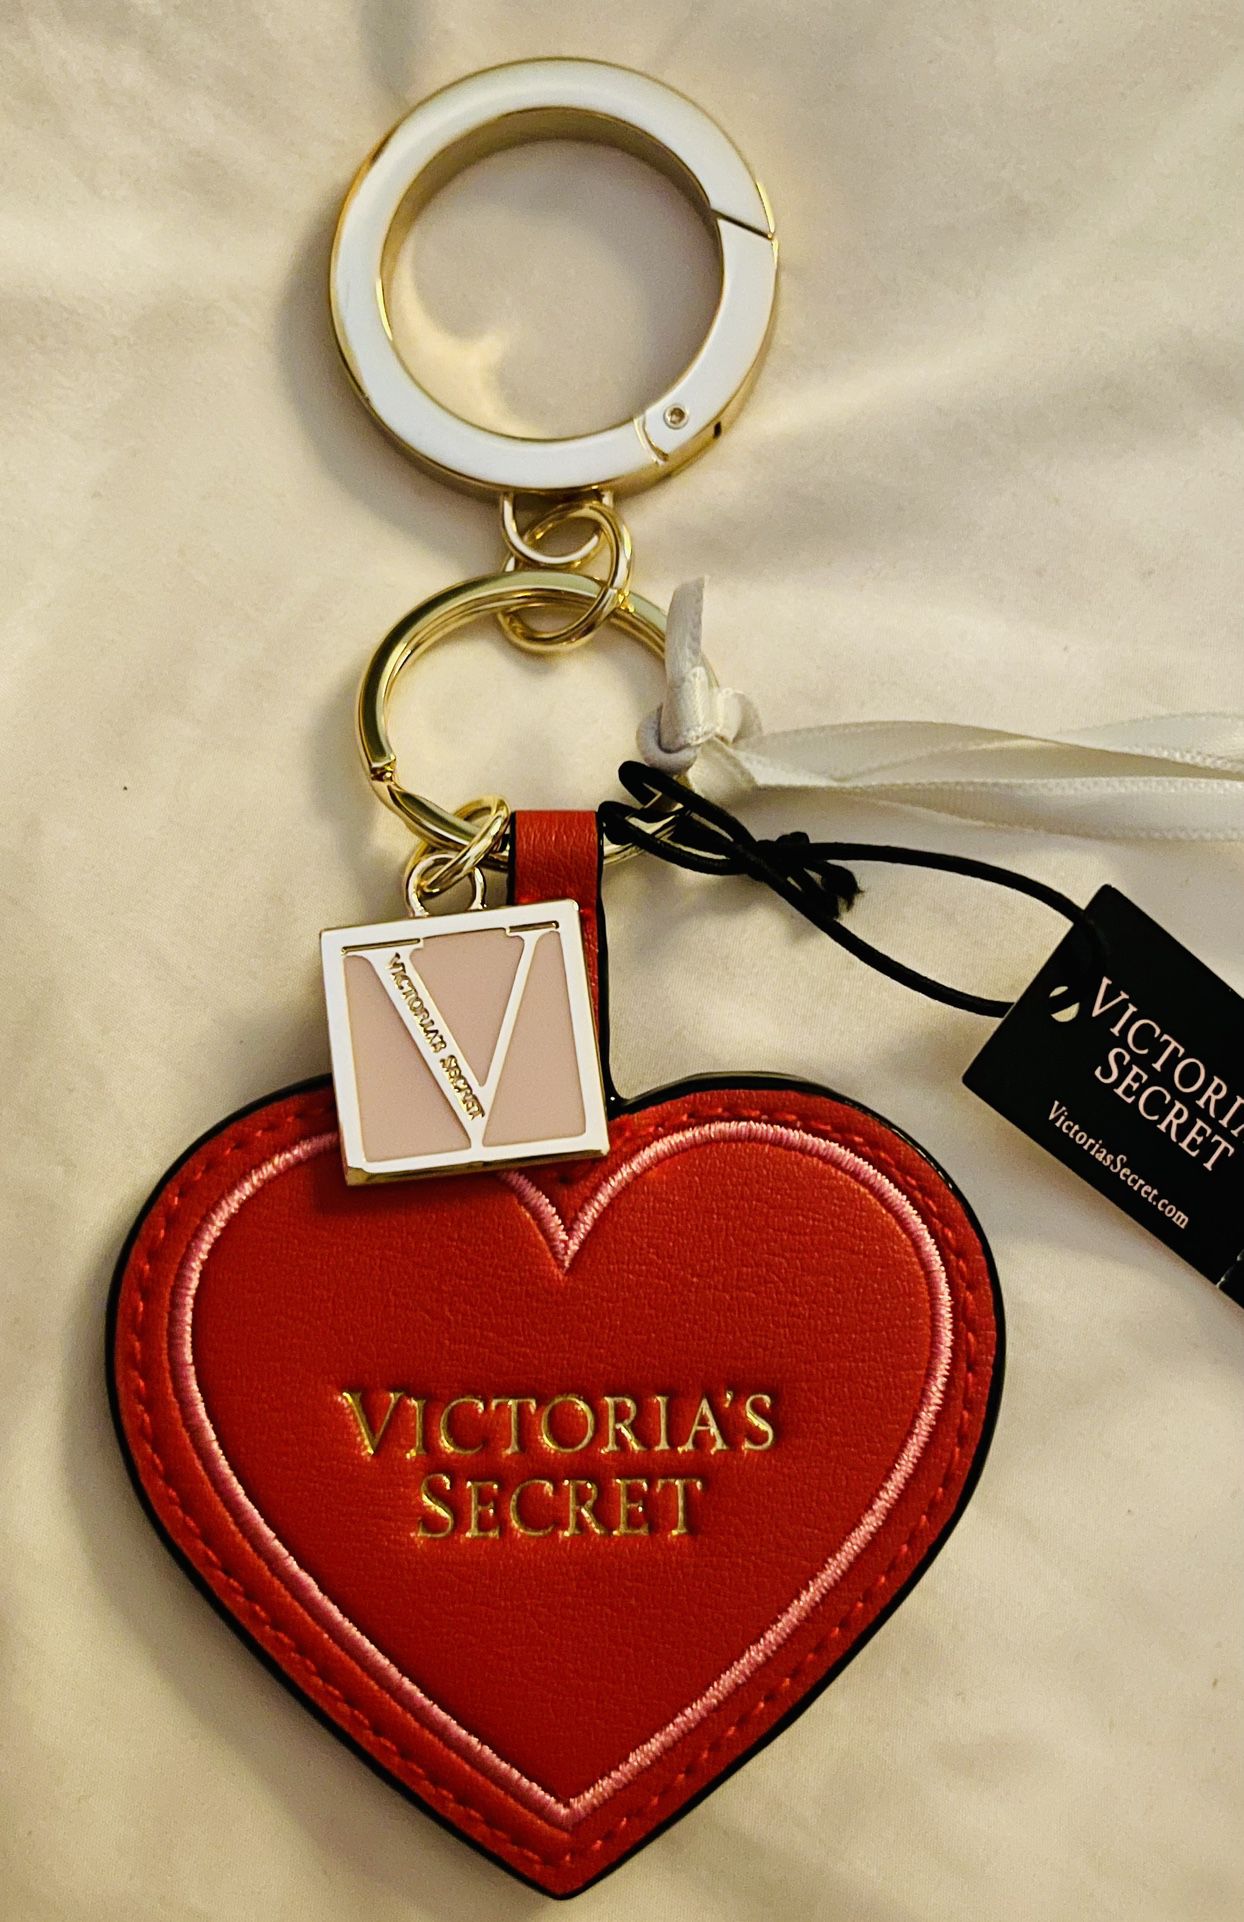 Victoria’s Secret Heart Keychain